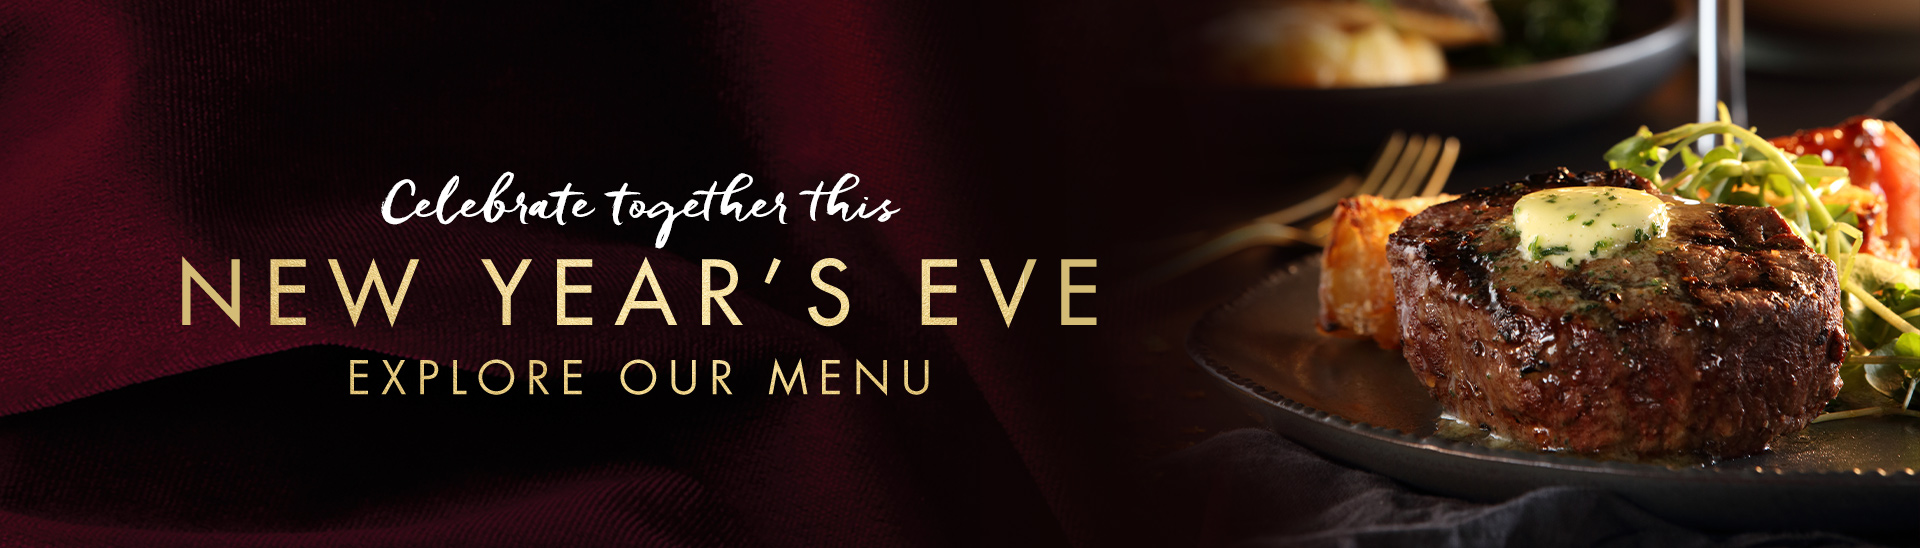 New Year’s eve menu at Miller & Carter Sutton Park 